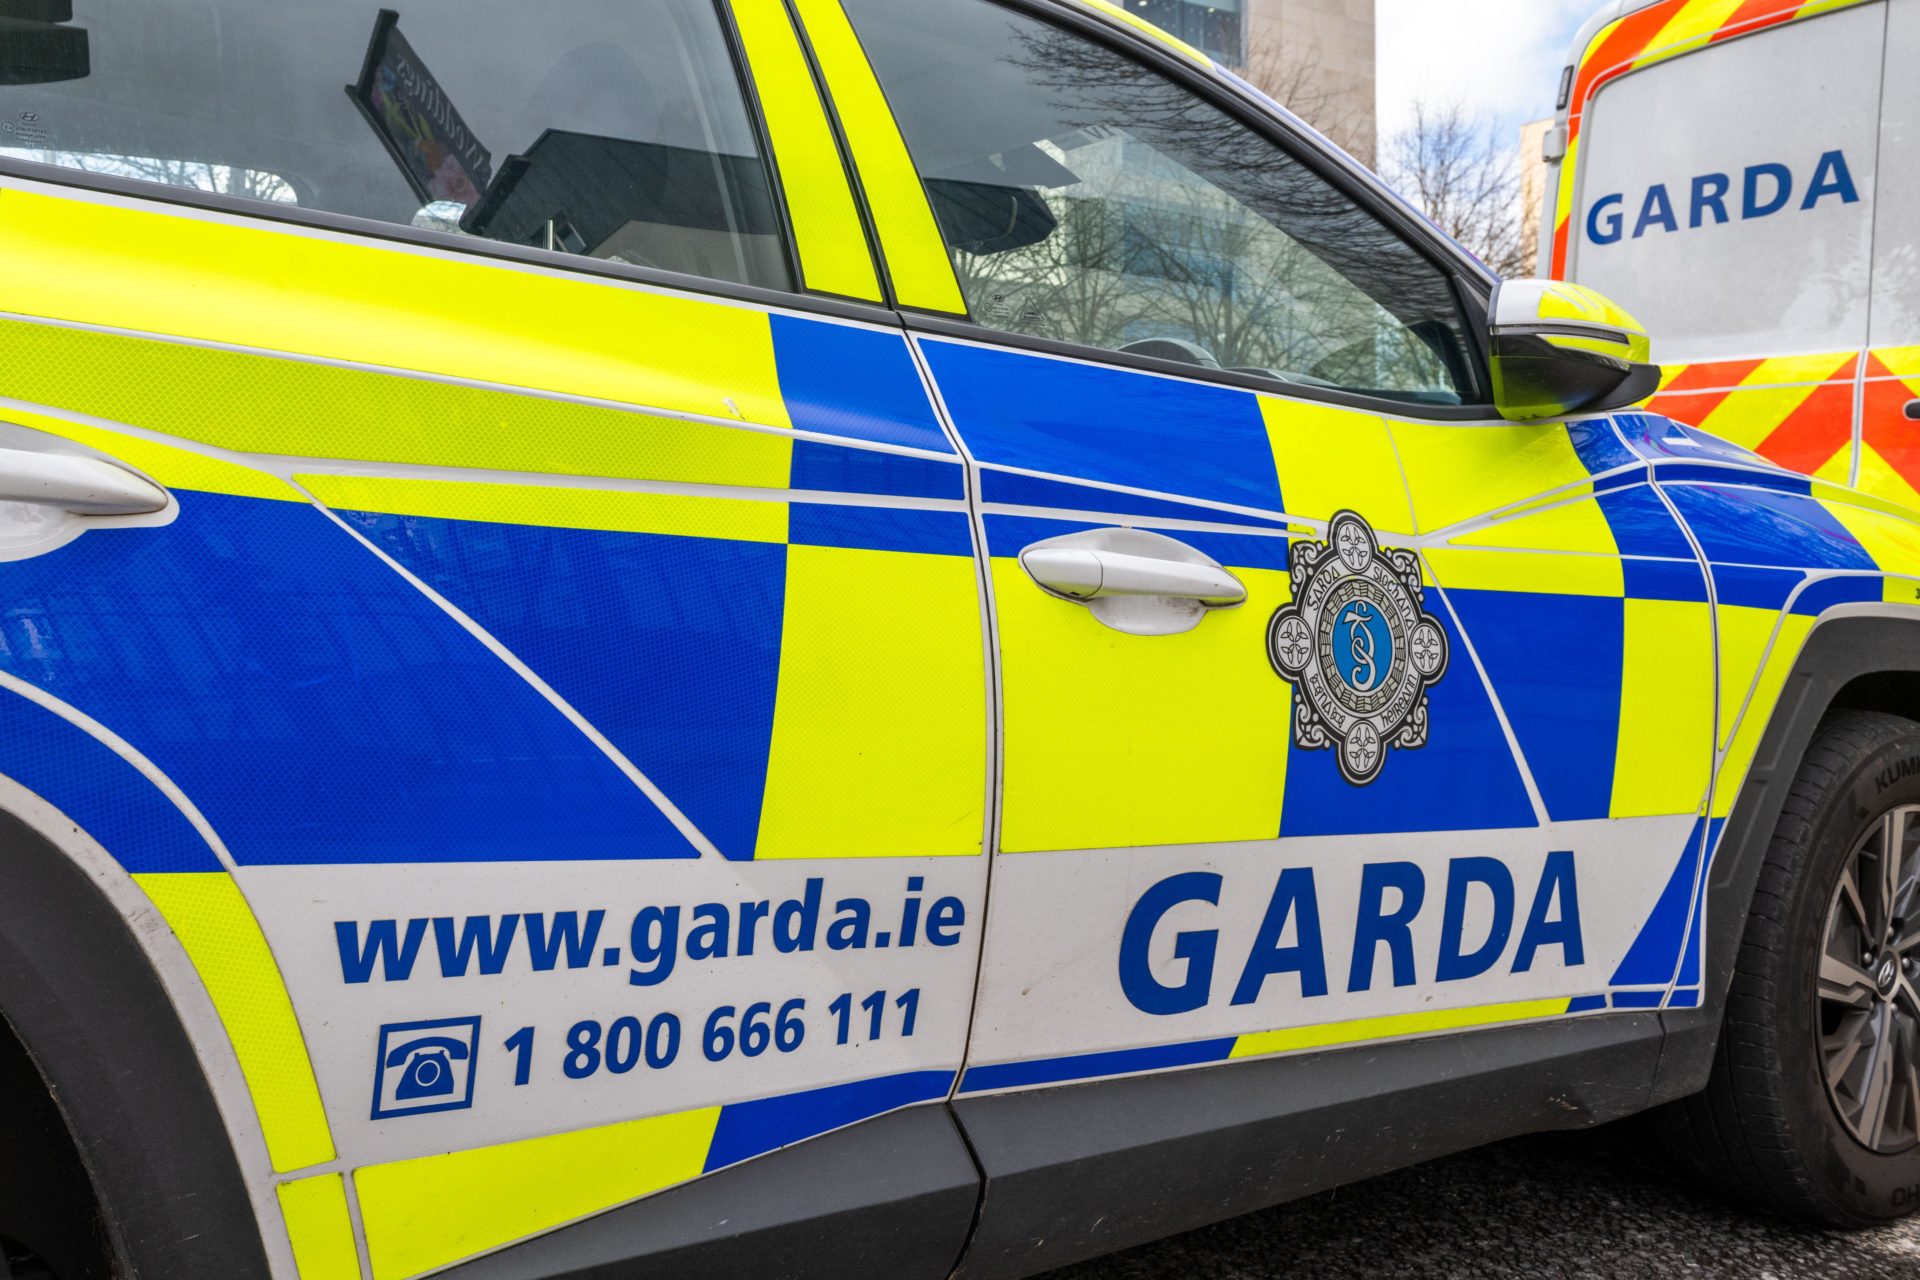 Garda car and van parked in Cork, Ireland.